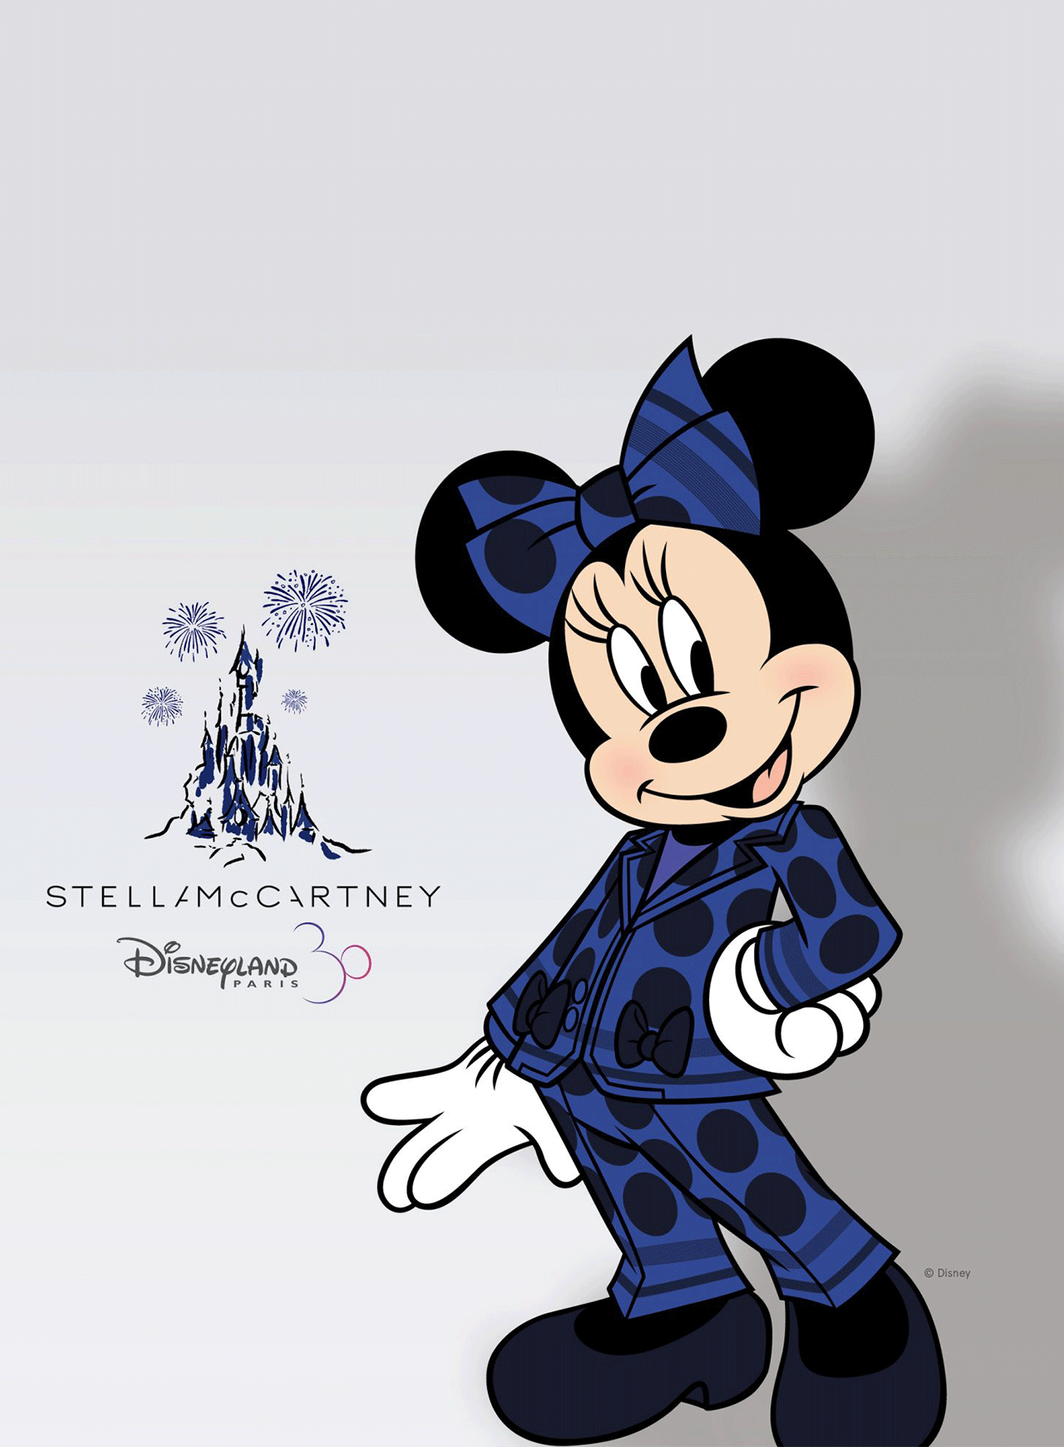 Stella McCartney signe une collaboration mode avec Disneyland Paris.